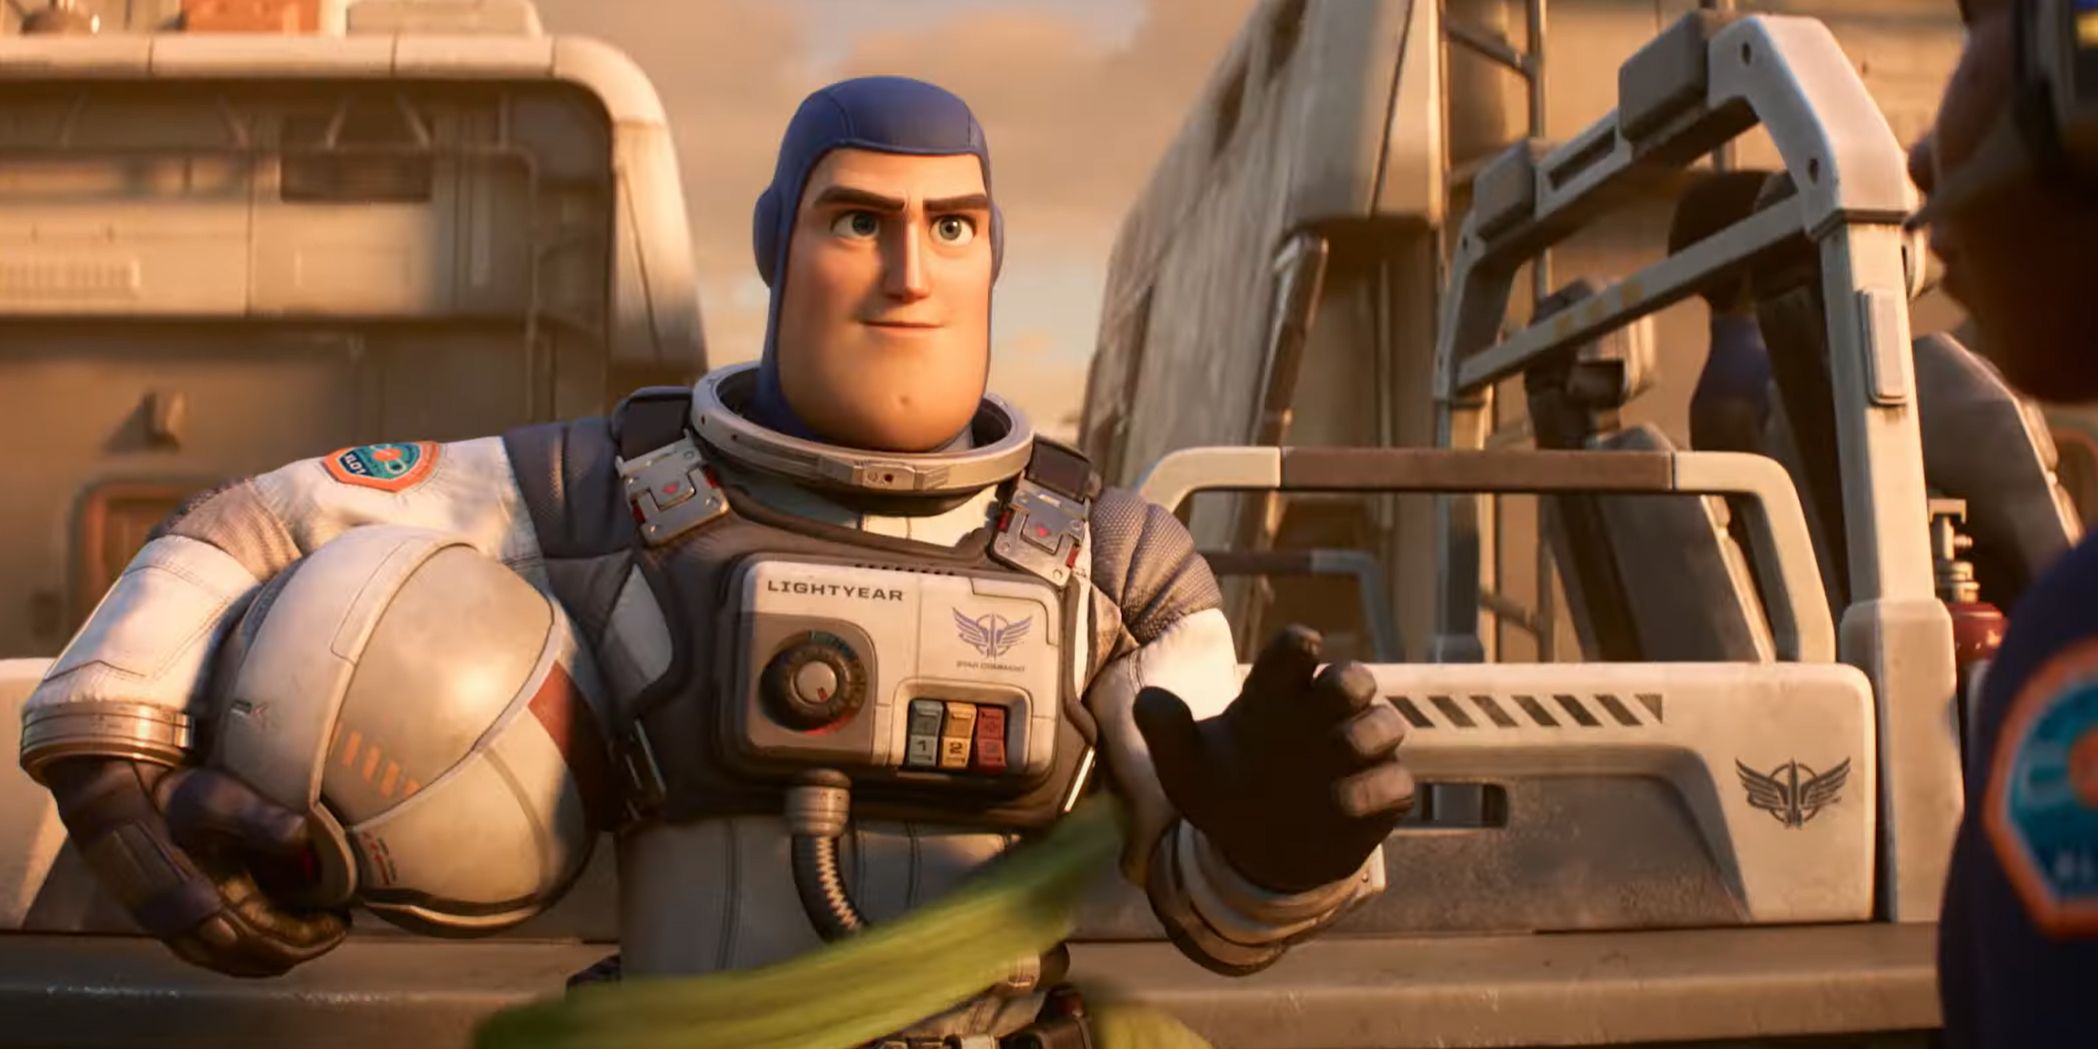 Teaser trailer for Lightyear released by Pixar